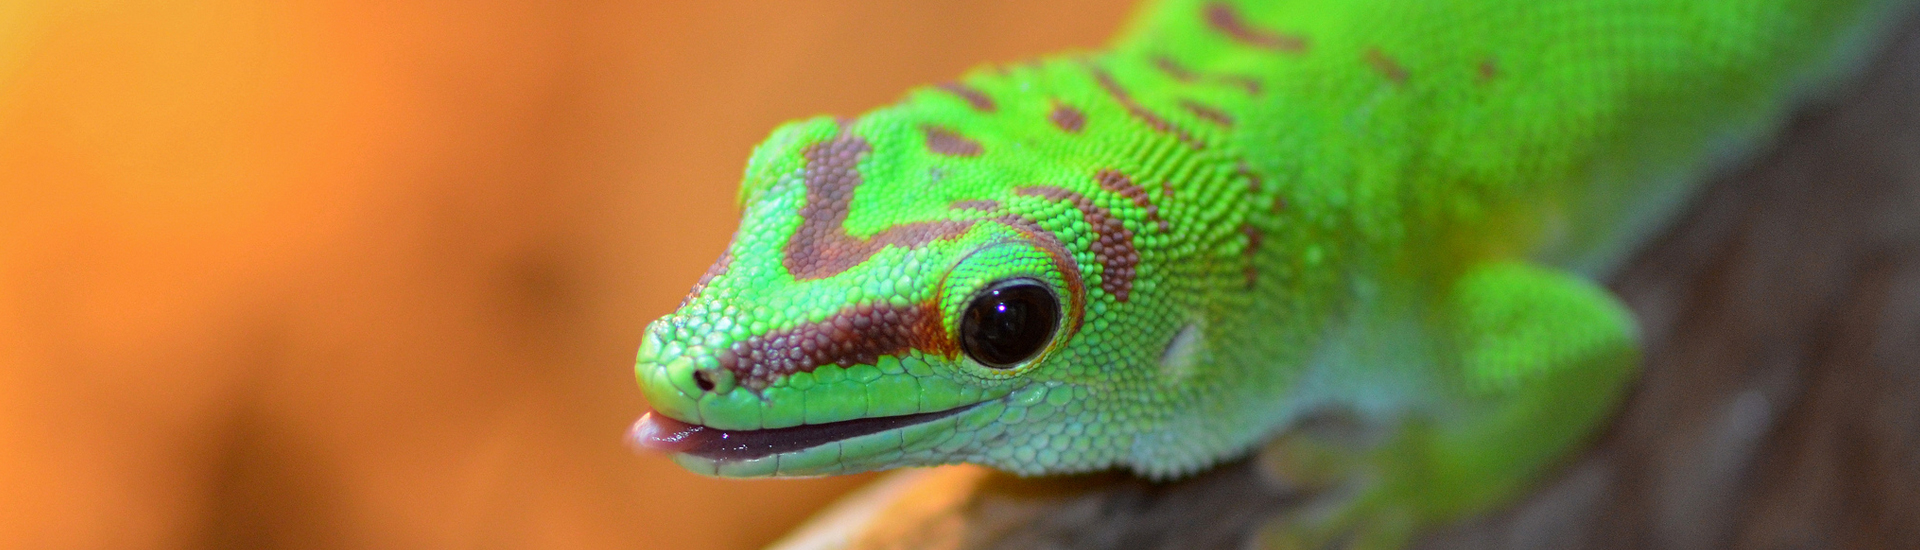 green gecko tongue